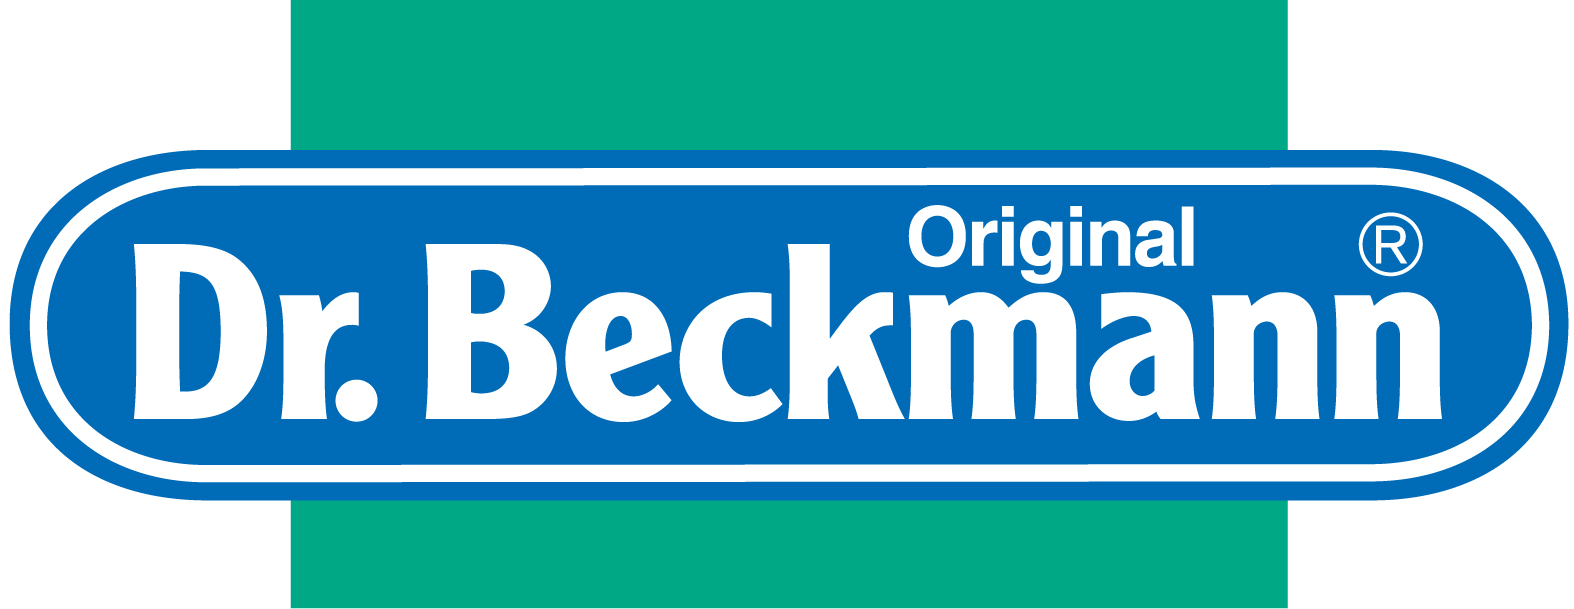 dr.beckmann Logo photo - 1